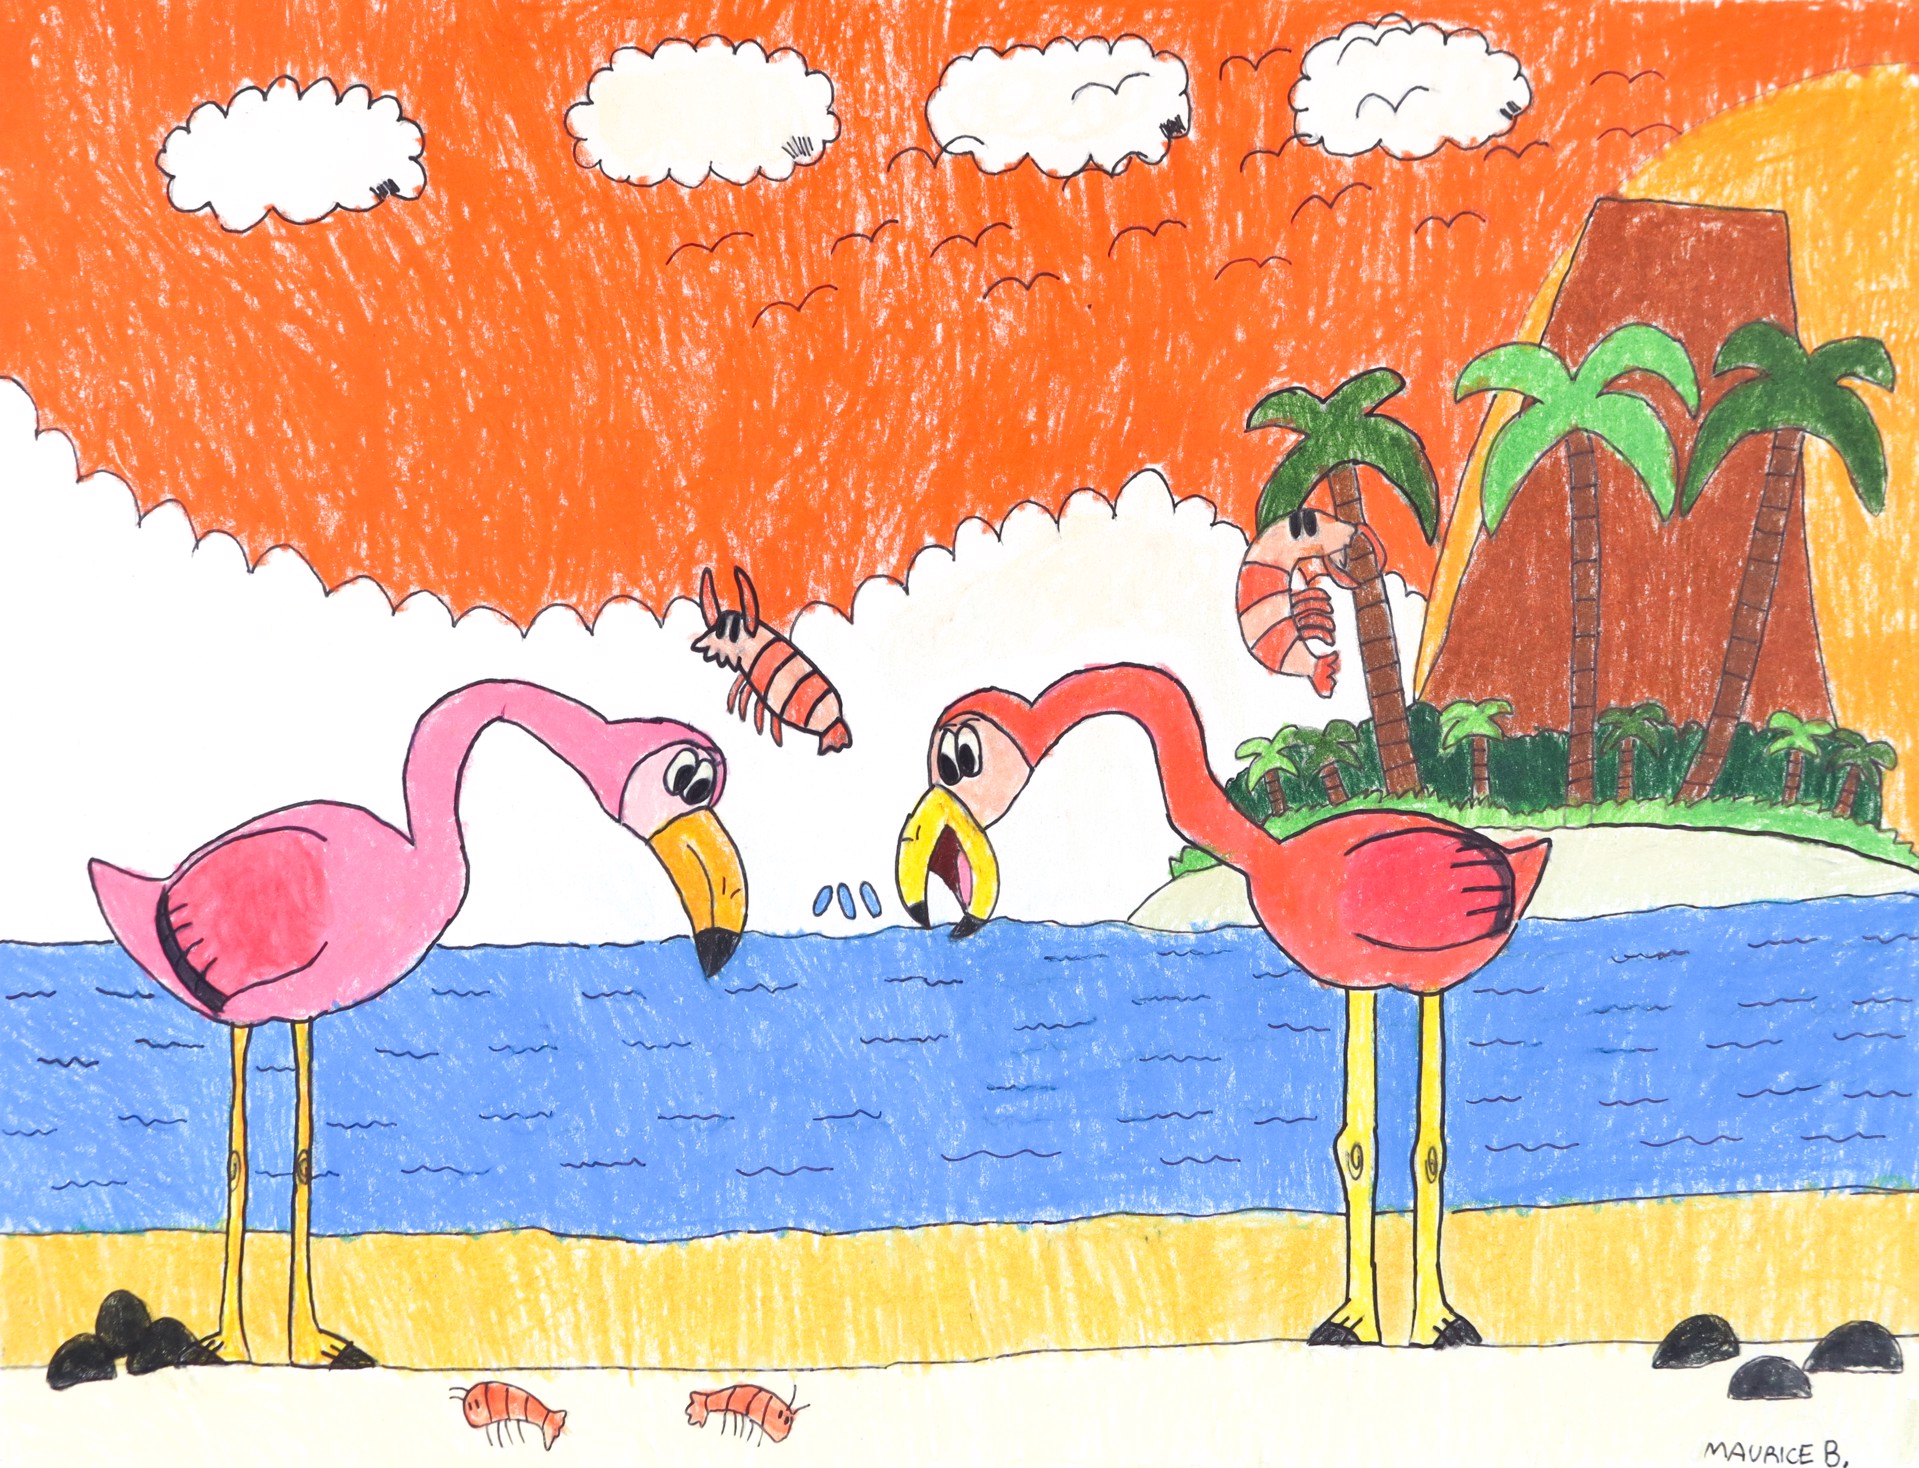 Flamingo Island by Maurice Barnes